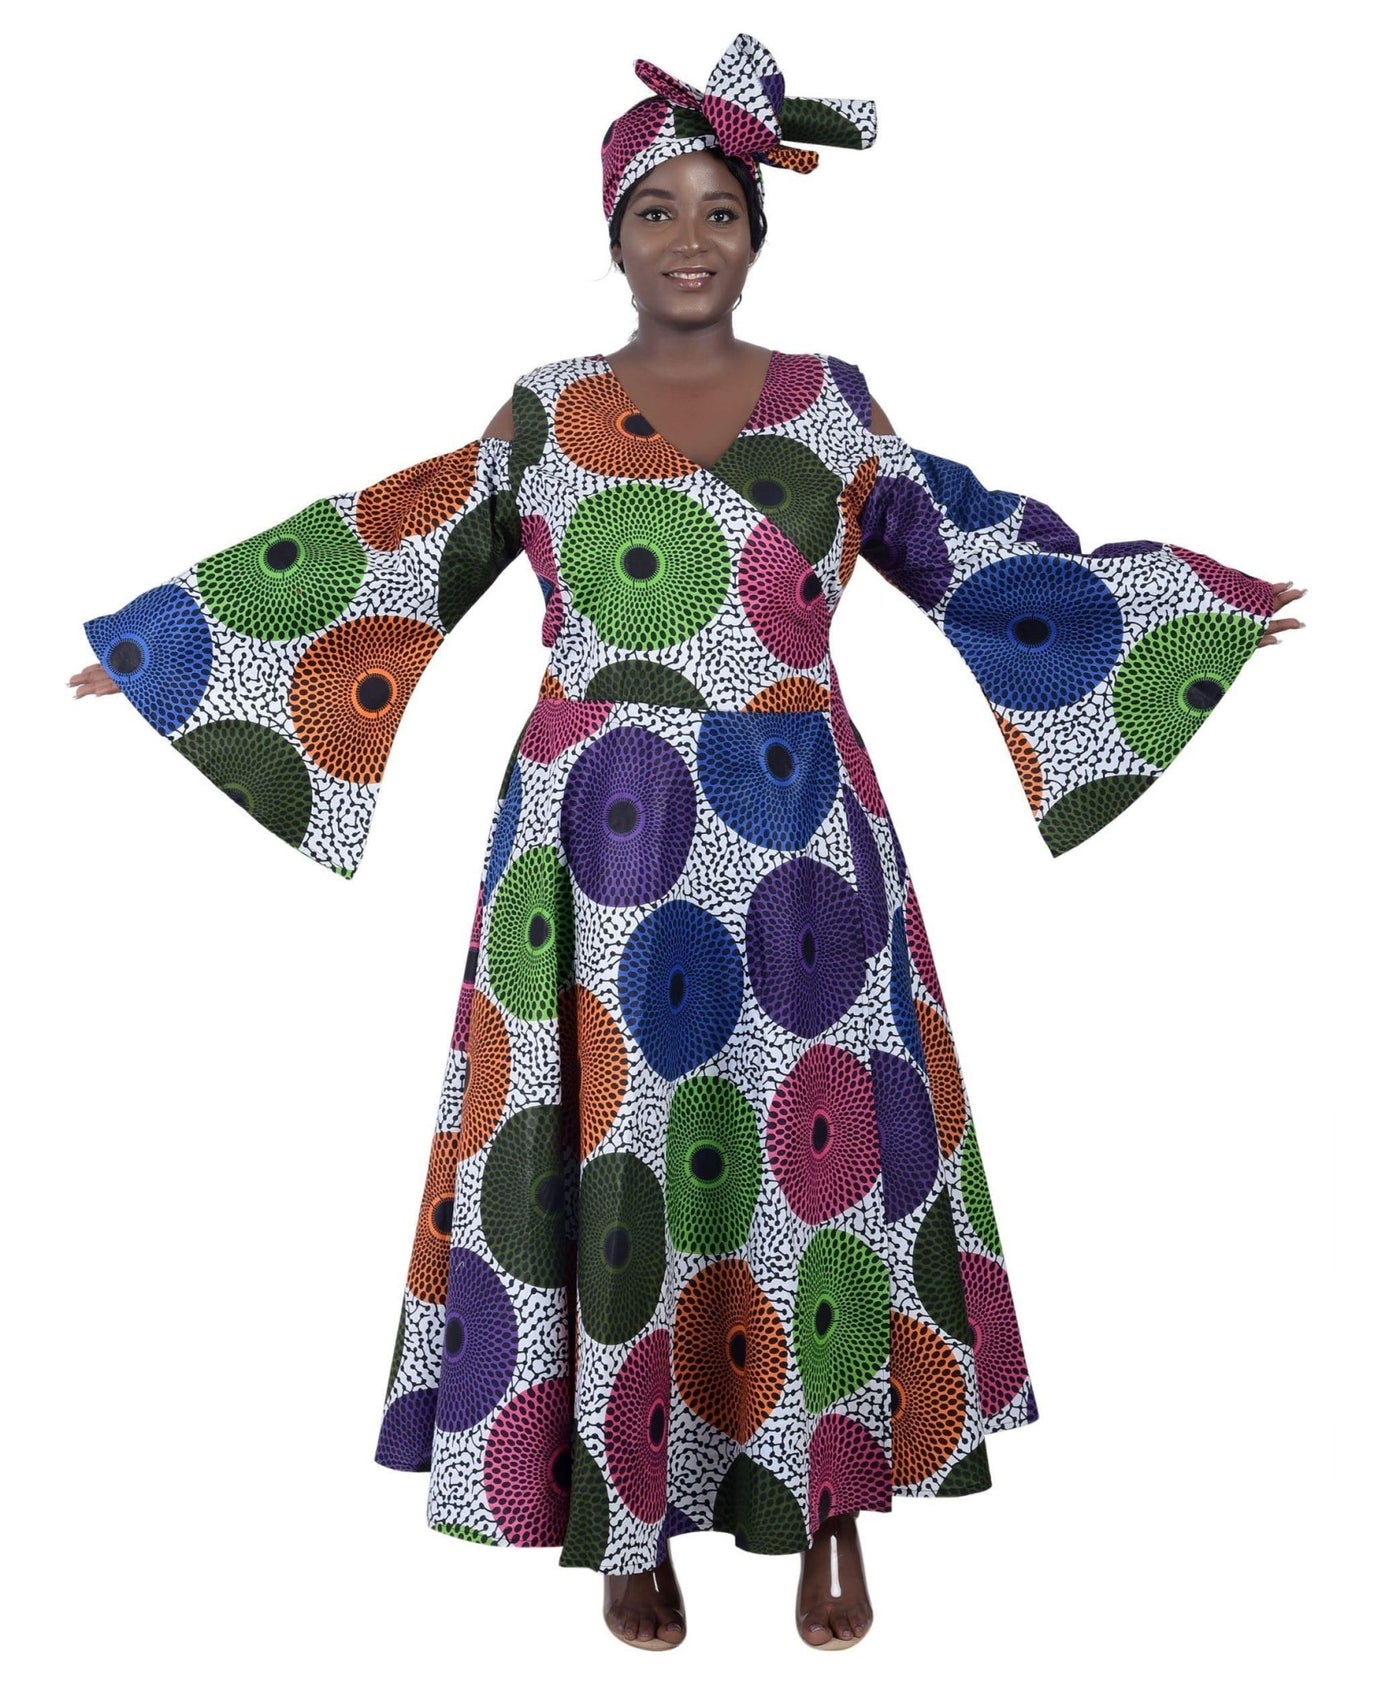 Bell Sleeves African Print Wrap Dress 1918 - Advance Apparels Inc